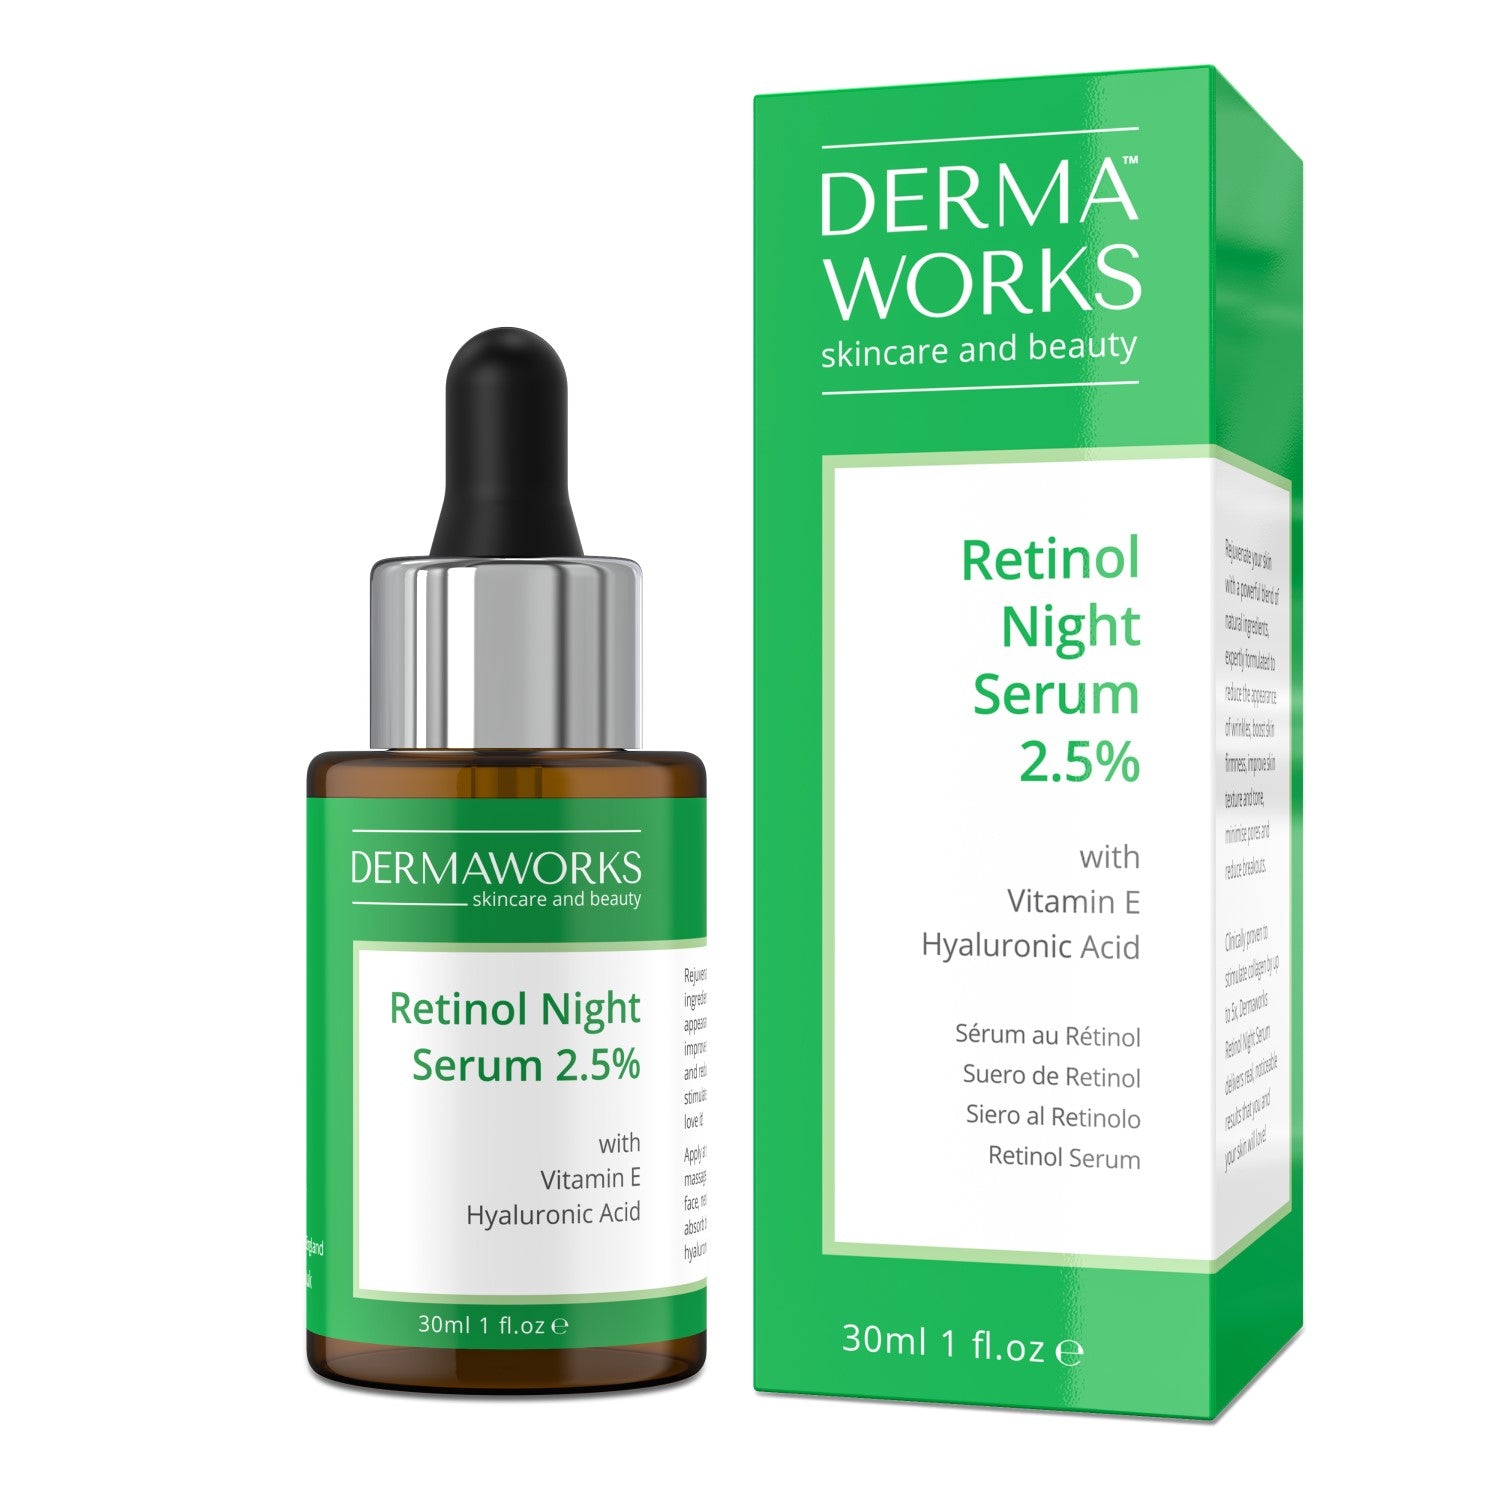 Dermaworks resurfacing retinol night serum for face with vitamin E, hyaluronic acid and jojoba oil, box and bottle 30ml